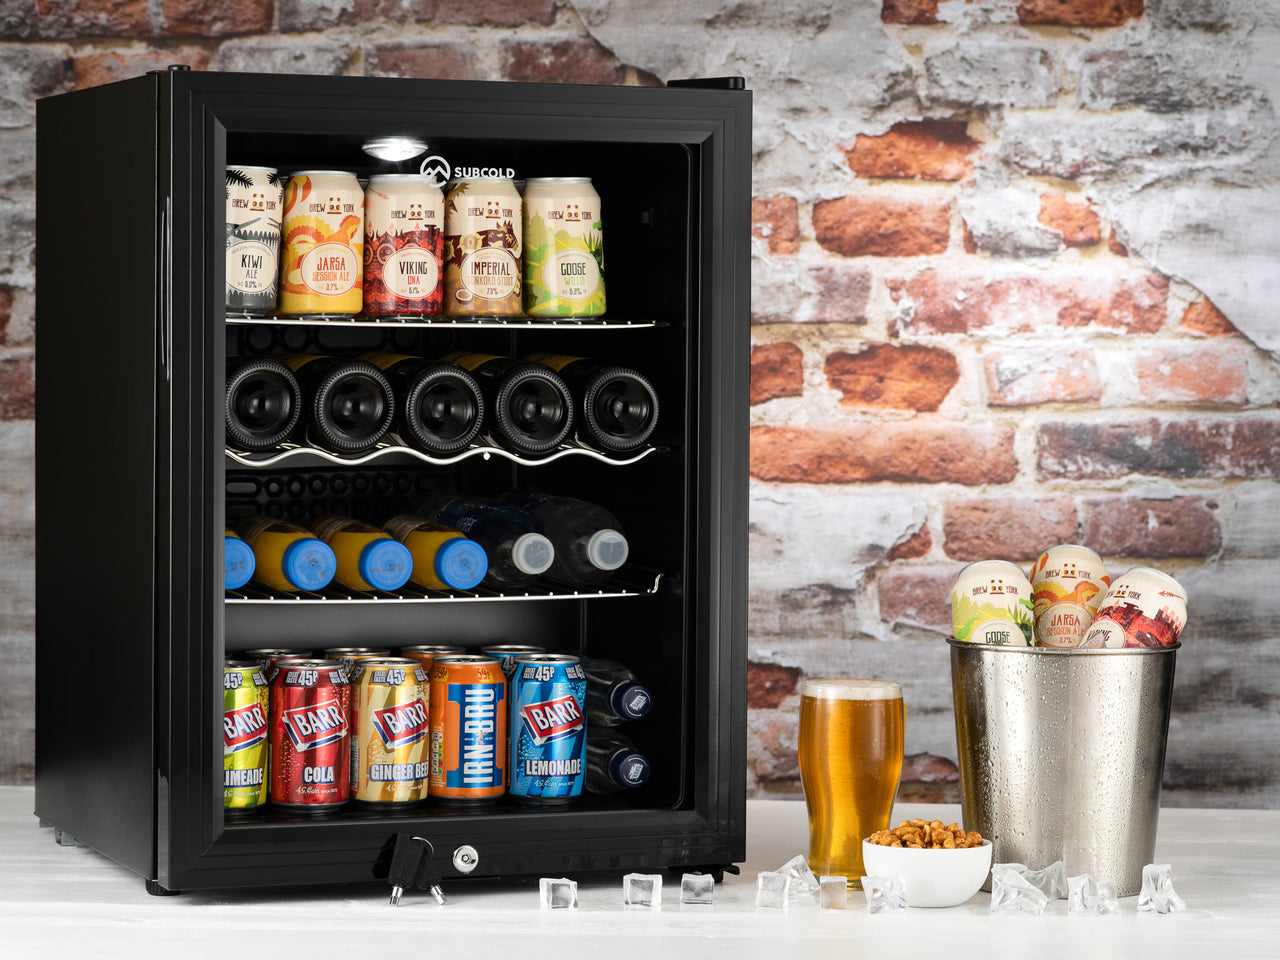 Subcold Super 65 litre beer fridge in colour black